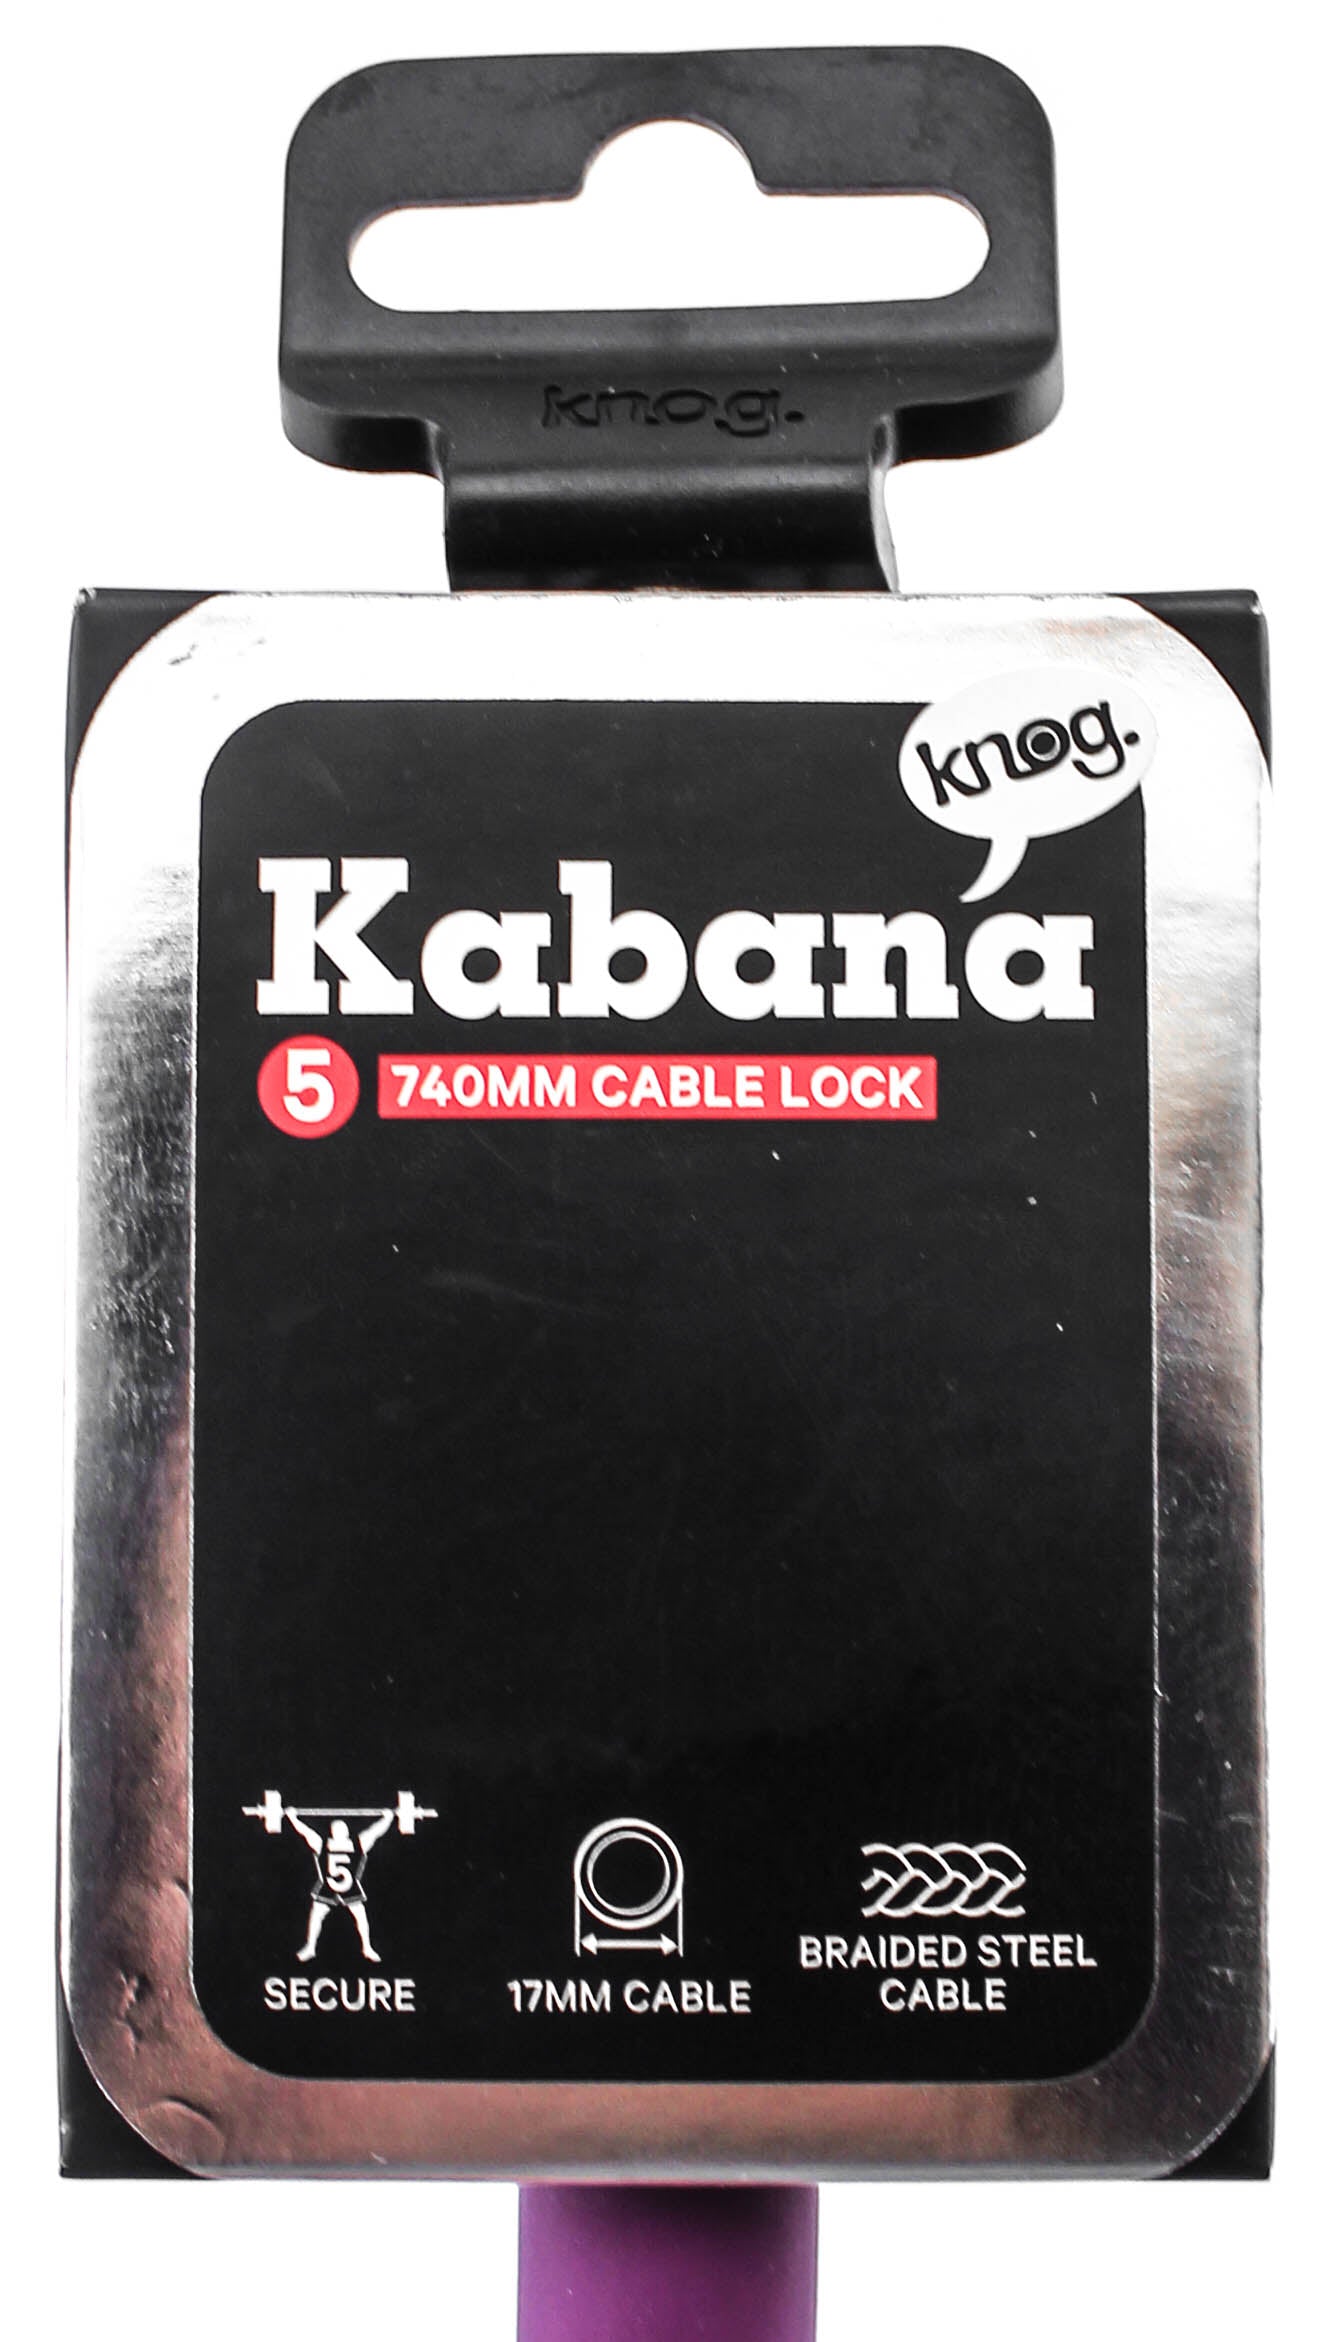 Knog Kabana Cable Bike Lock 740mm Grape Purple Silicone Steel Cable New - Random Bike Parts